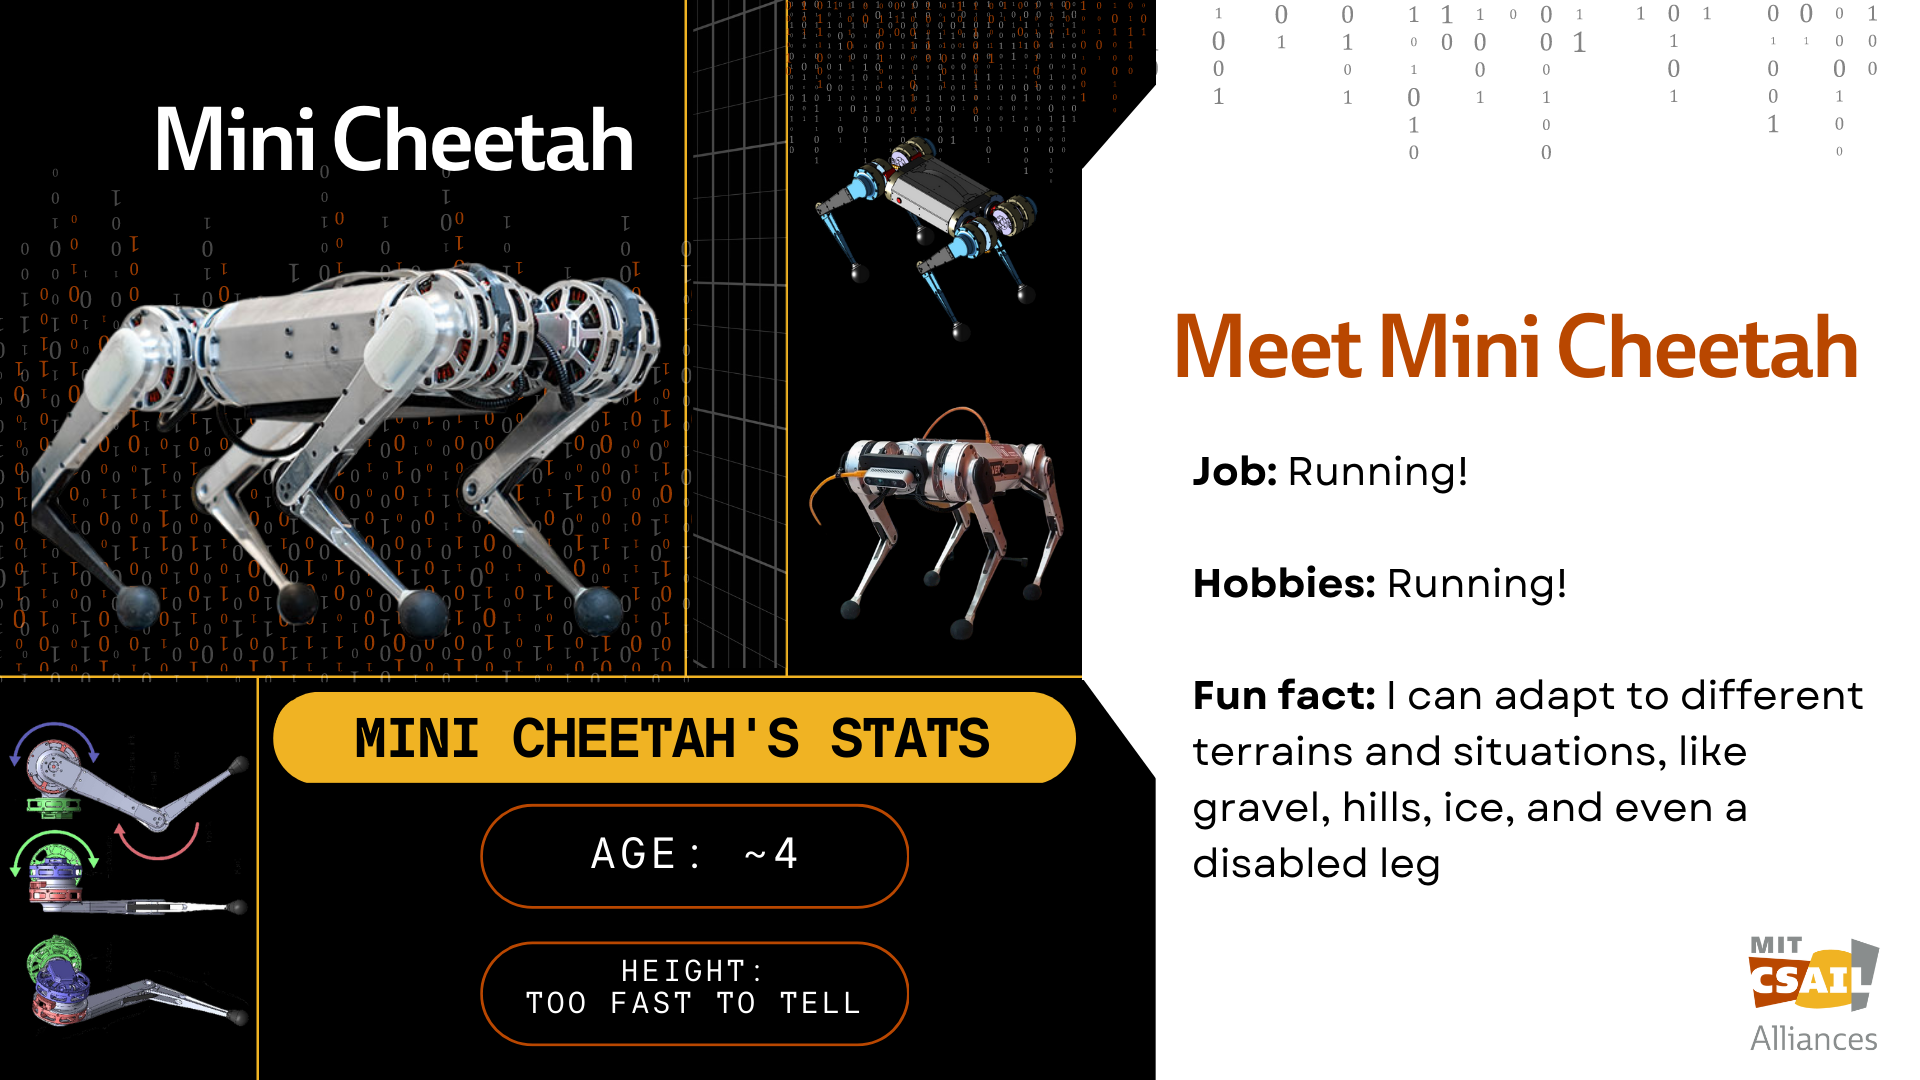 Mini Cheetah robot collage with text that reads "Mini Cheetah"